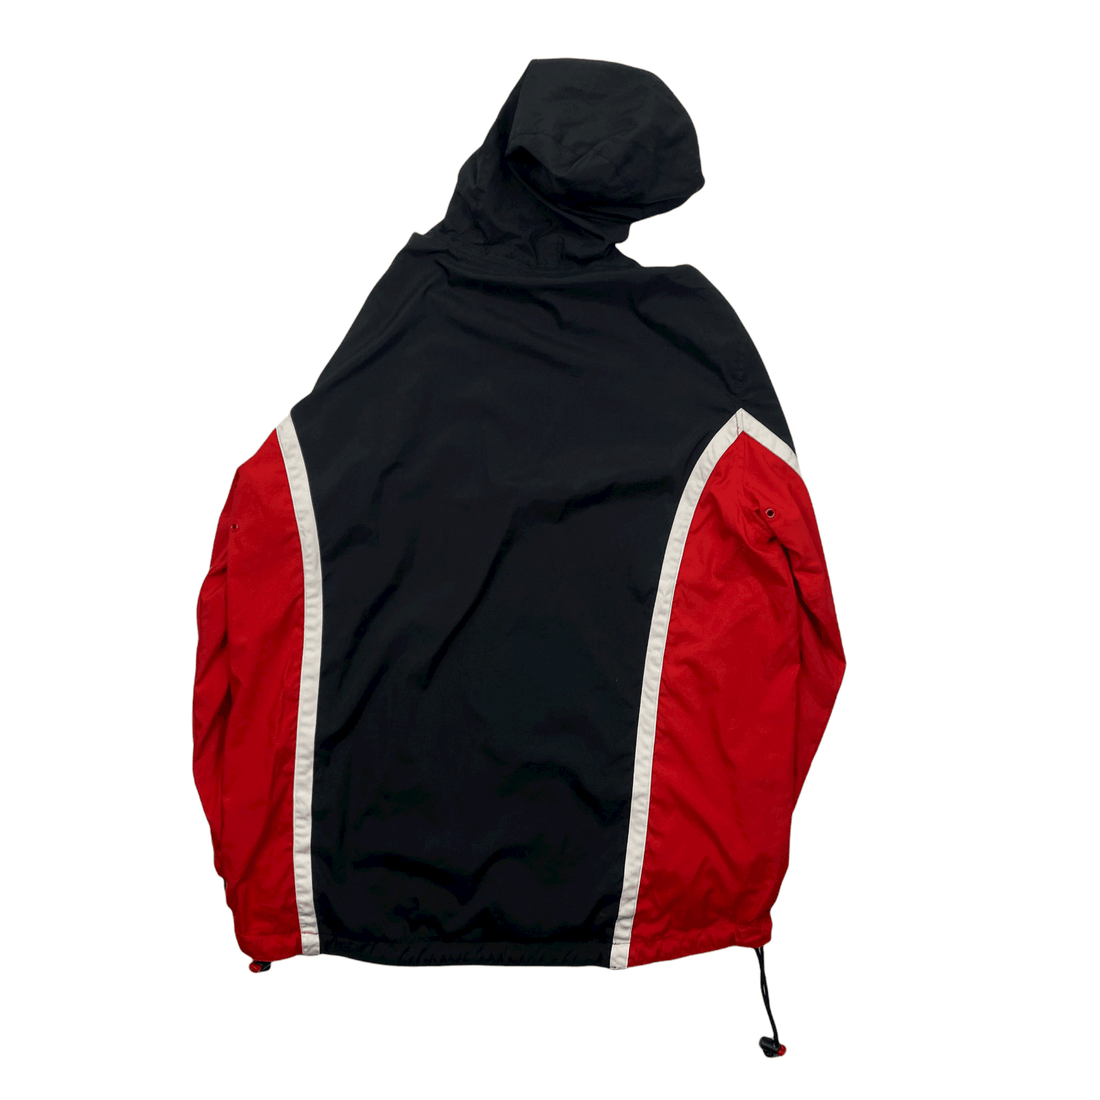 Vintage 90s Black + Red Ralph Lauren Full Zip Waterproof Jacket - Small - The Streetwear Studio